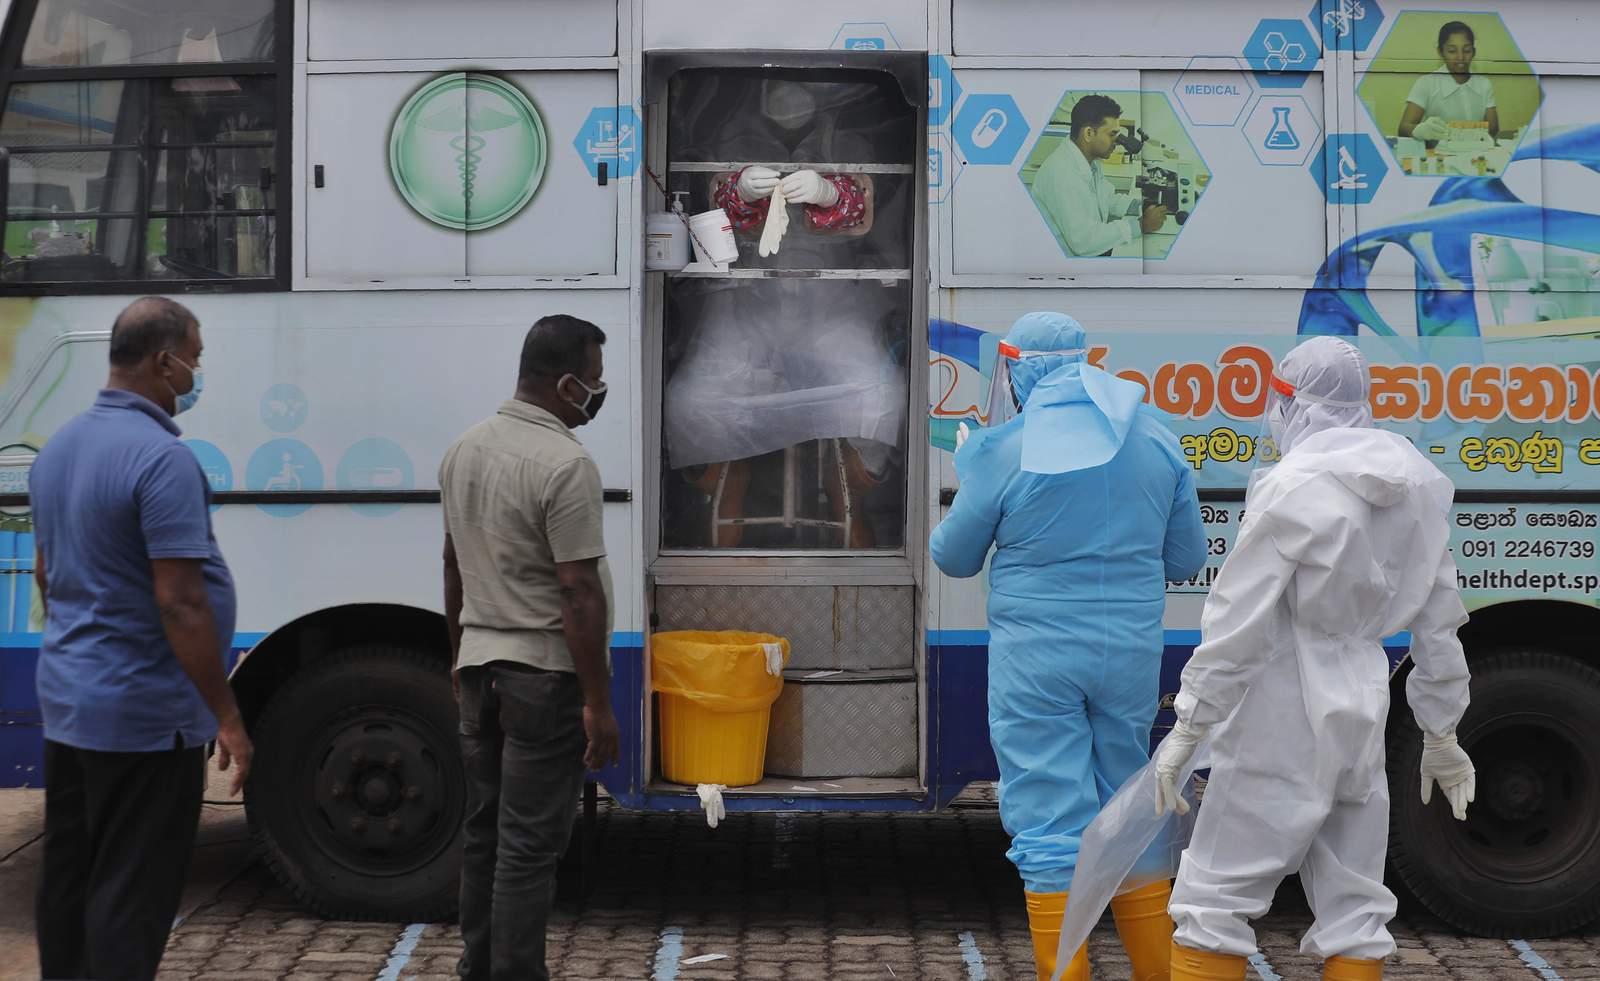 The Latest: Sri Lanka bans gatherings amid virus cluster